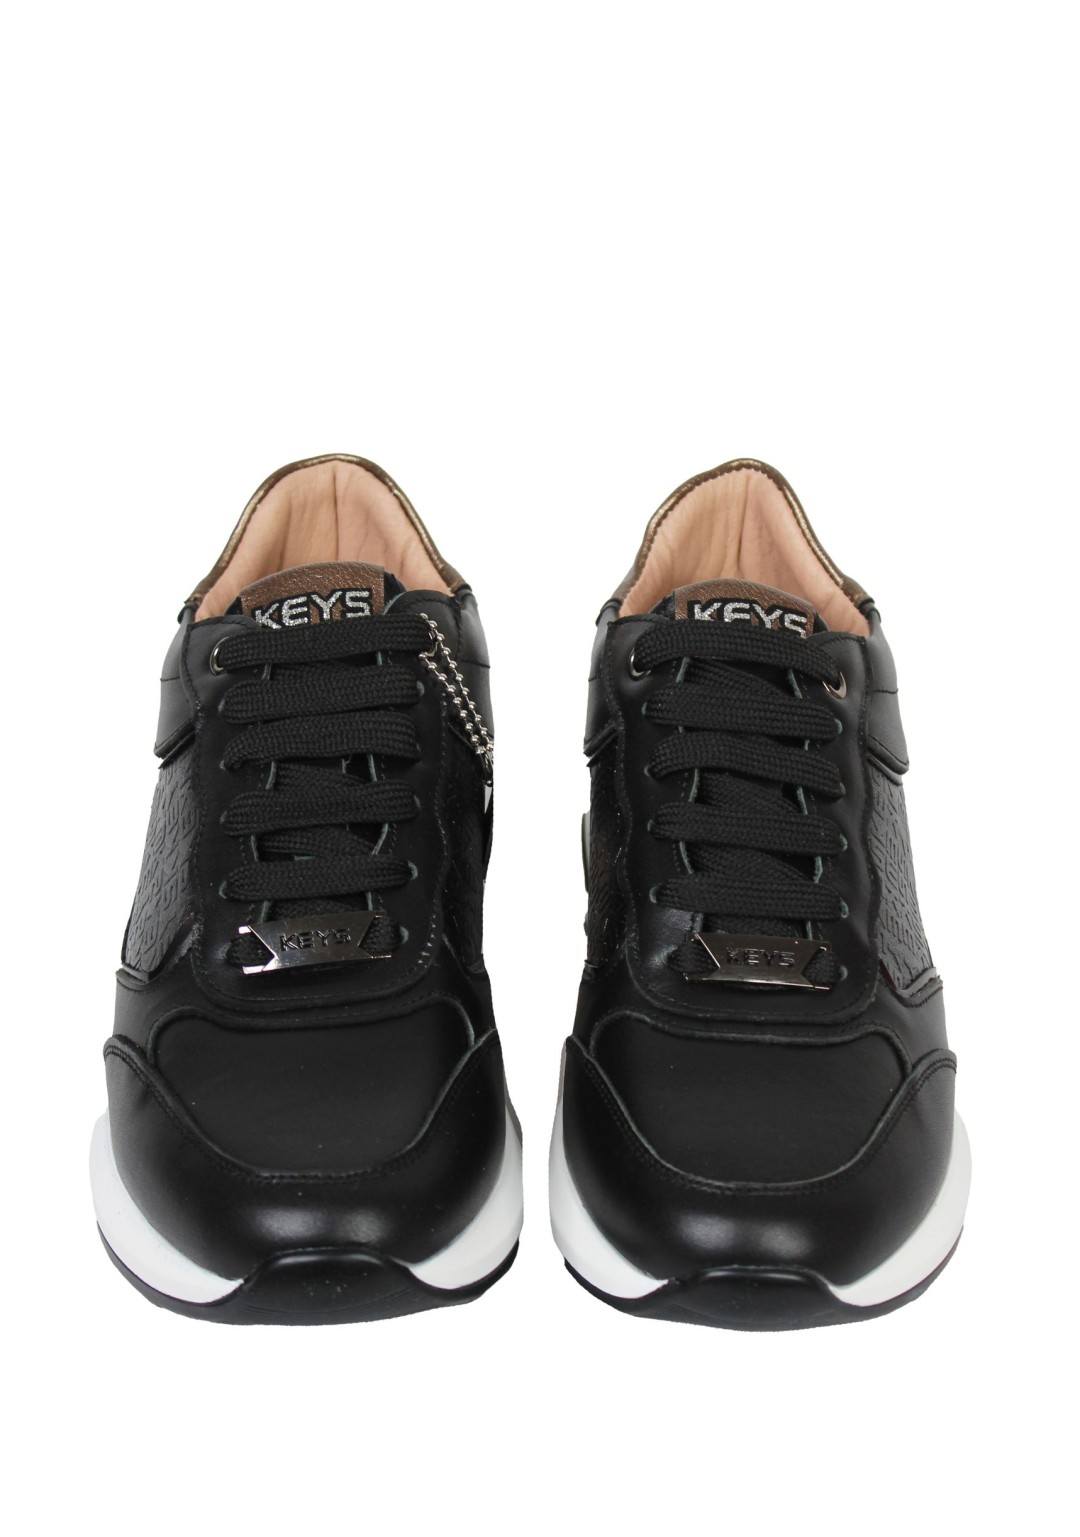 KEYS - Sneaker Logata - Donna - K-8350 N